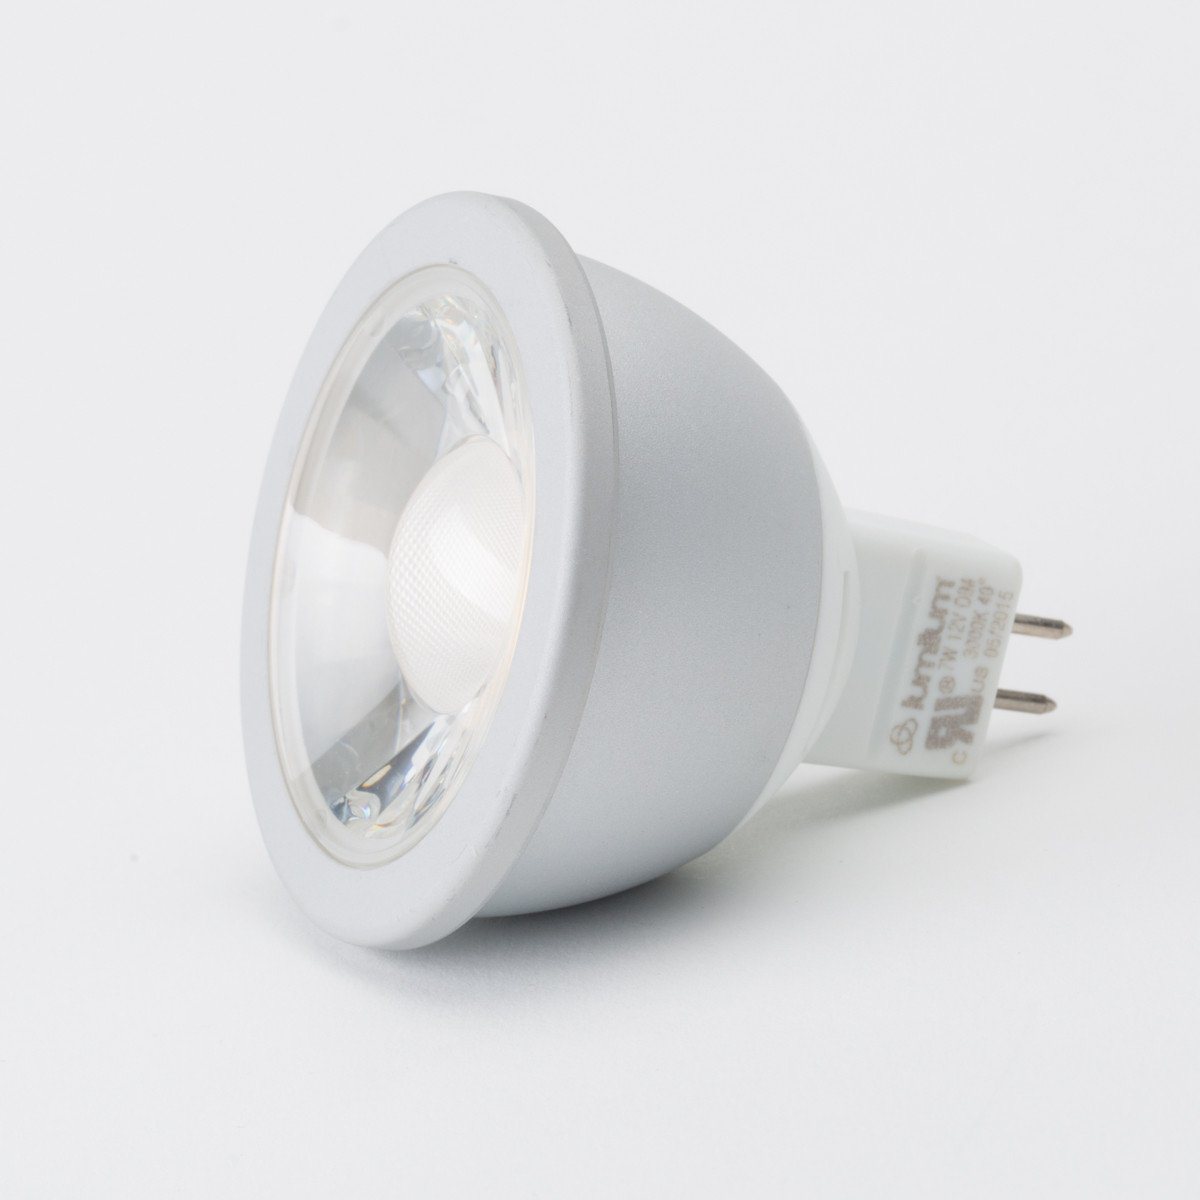 MR16 Small LED Light Bulb - 12V - 7W